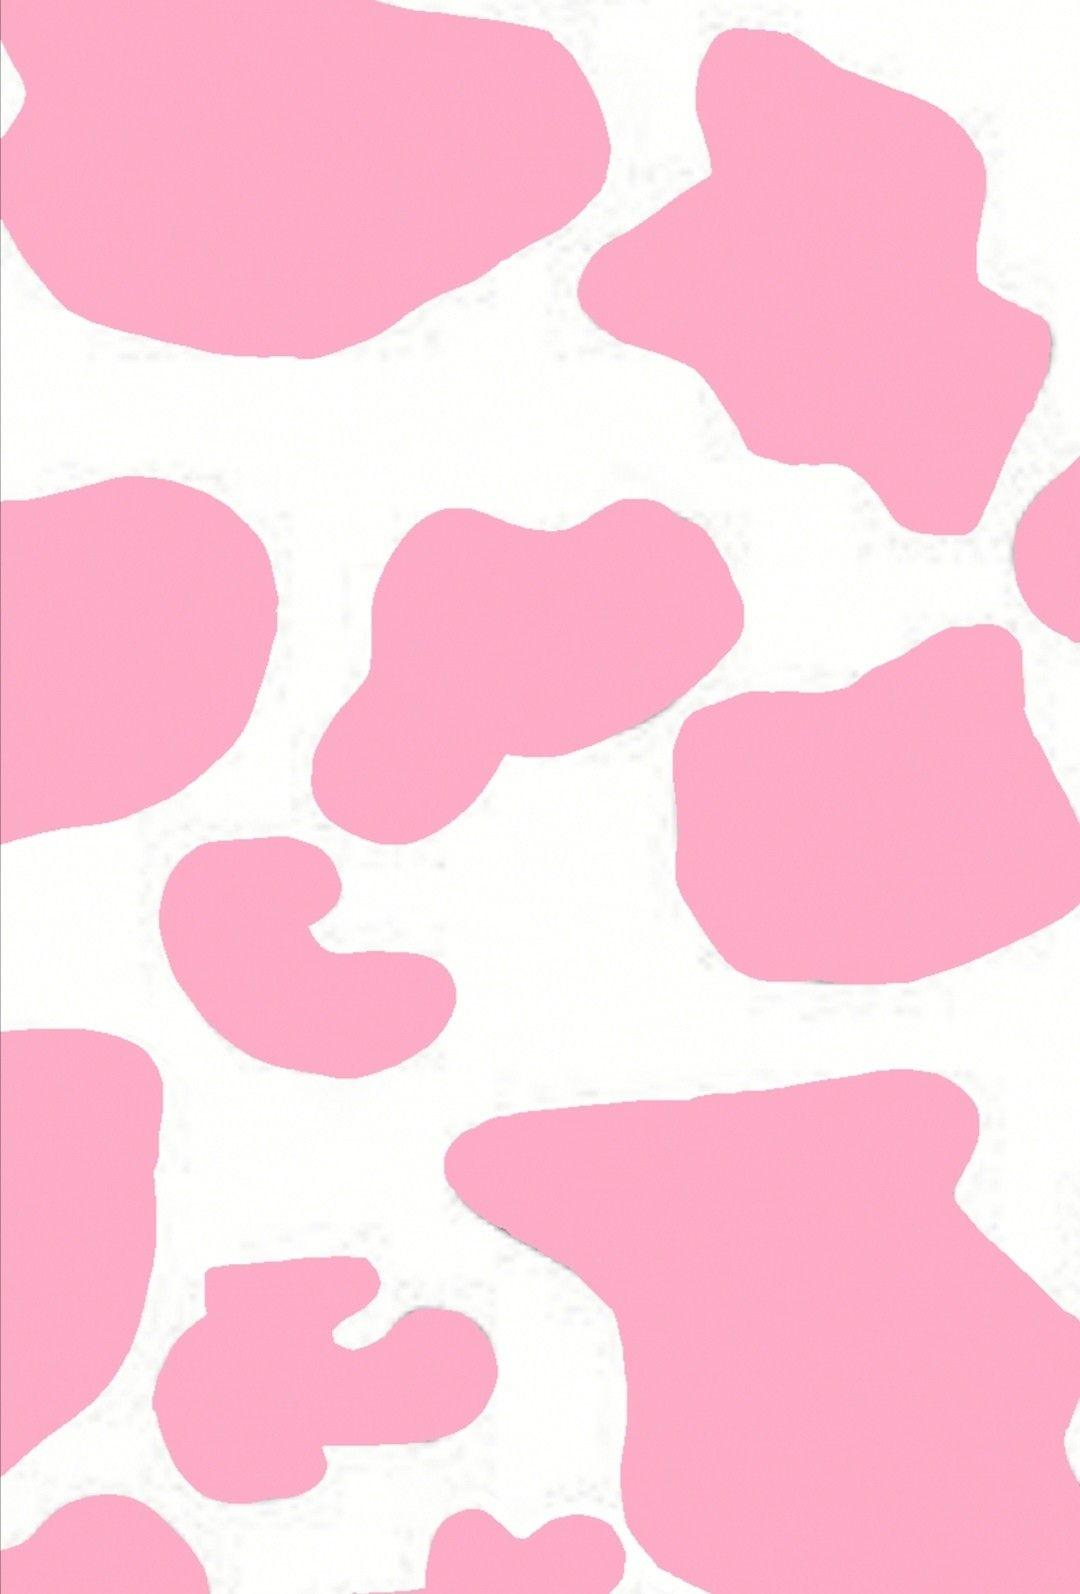 Wallpaper Aesthetic Cow Cowprint Happy Heart Im Baby Love Pink   Wallpaperforu